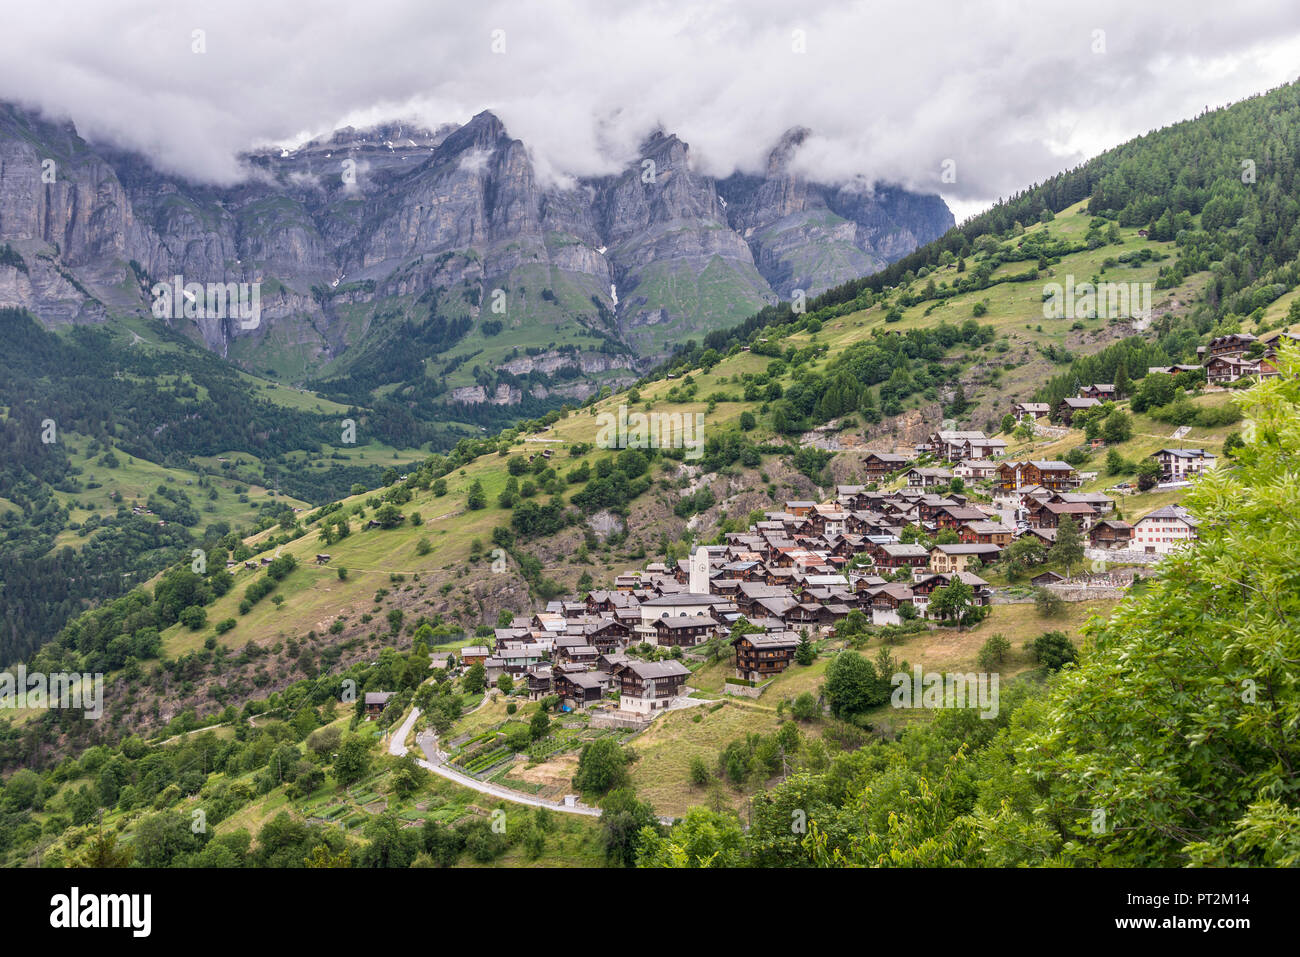 Switzerland, canton Valais, district Leuk, Albinen, village view Stock Photo